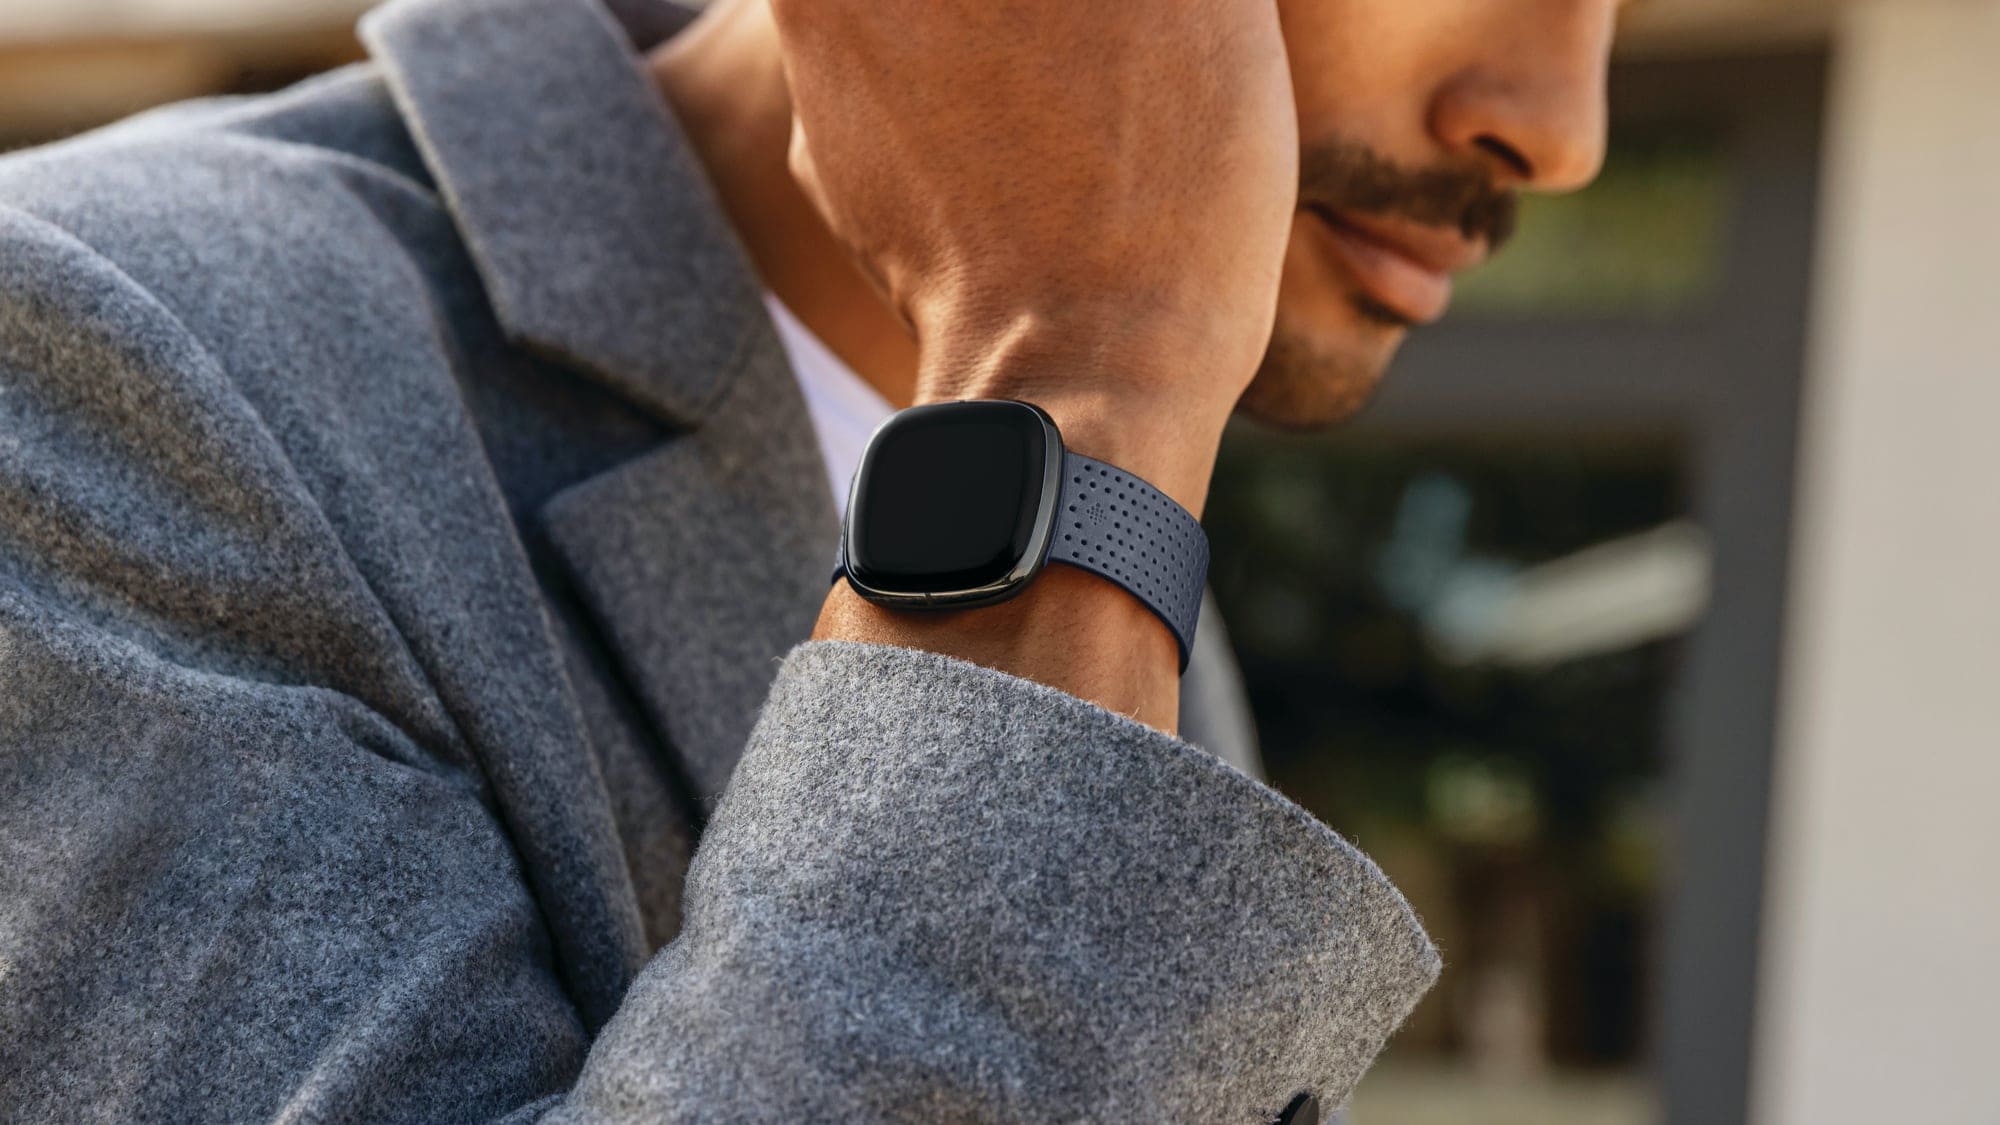 Best Buy Fitbit - Sense 2 Advanced Health Smartwatch